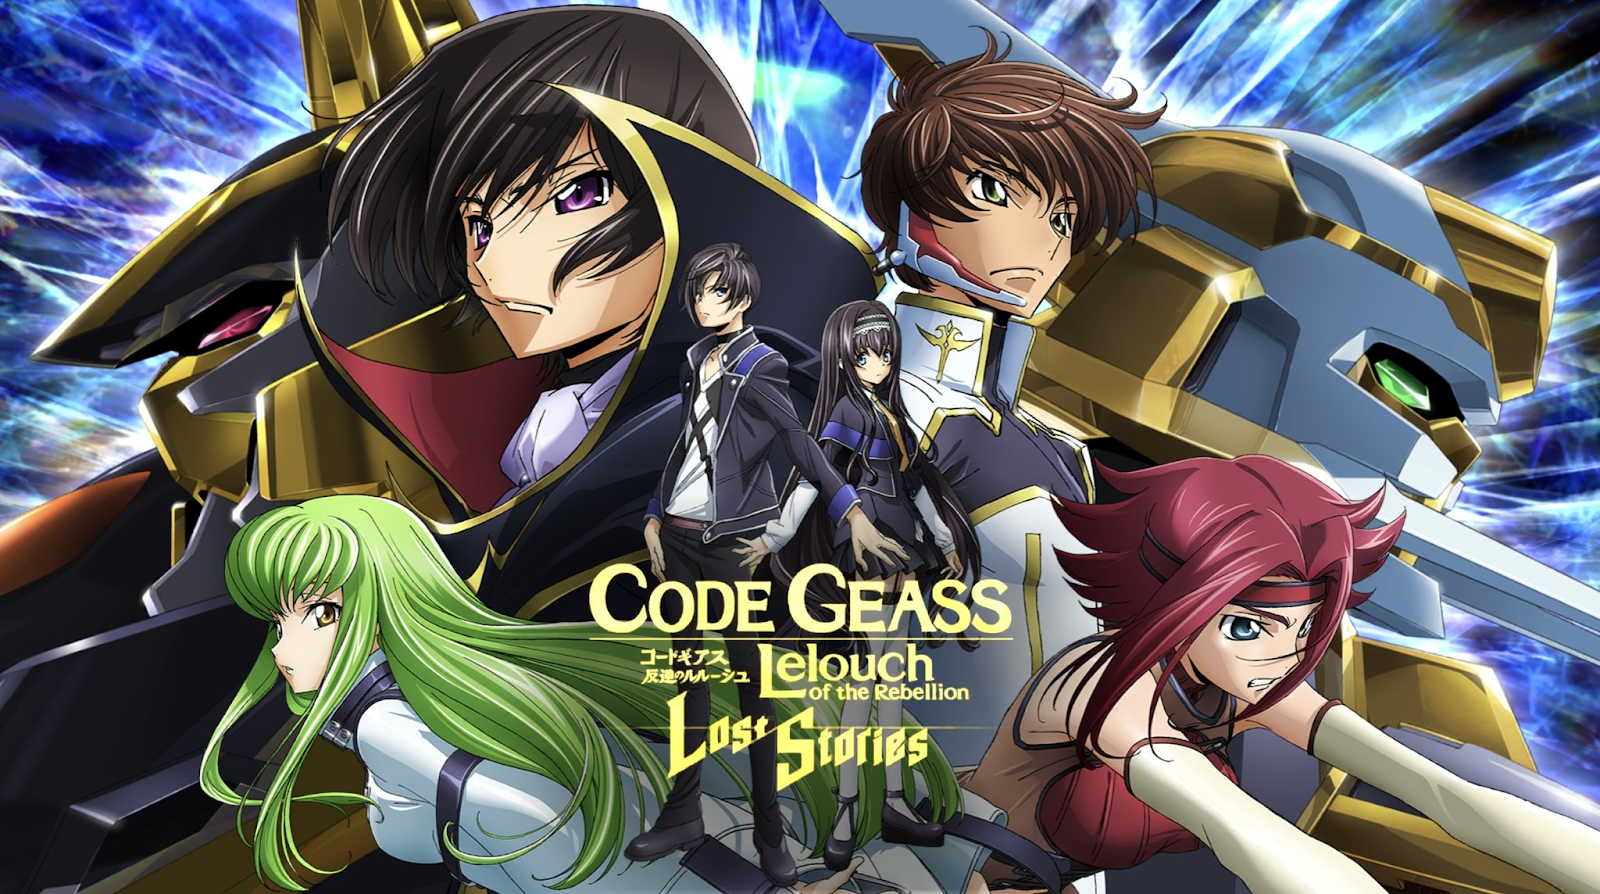 Code Geass: Lost Stories Redeem Codes